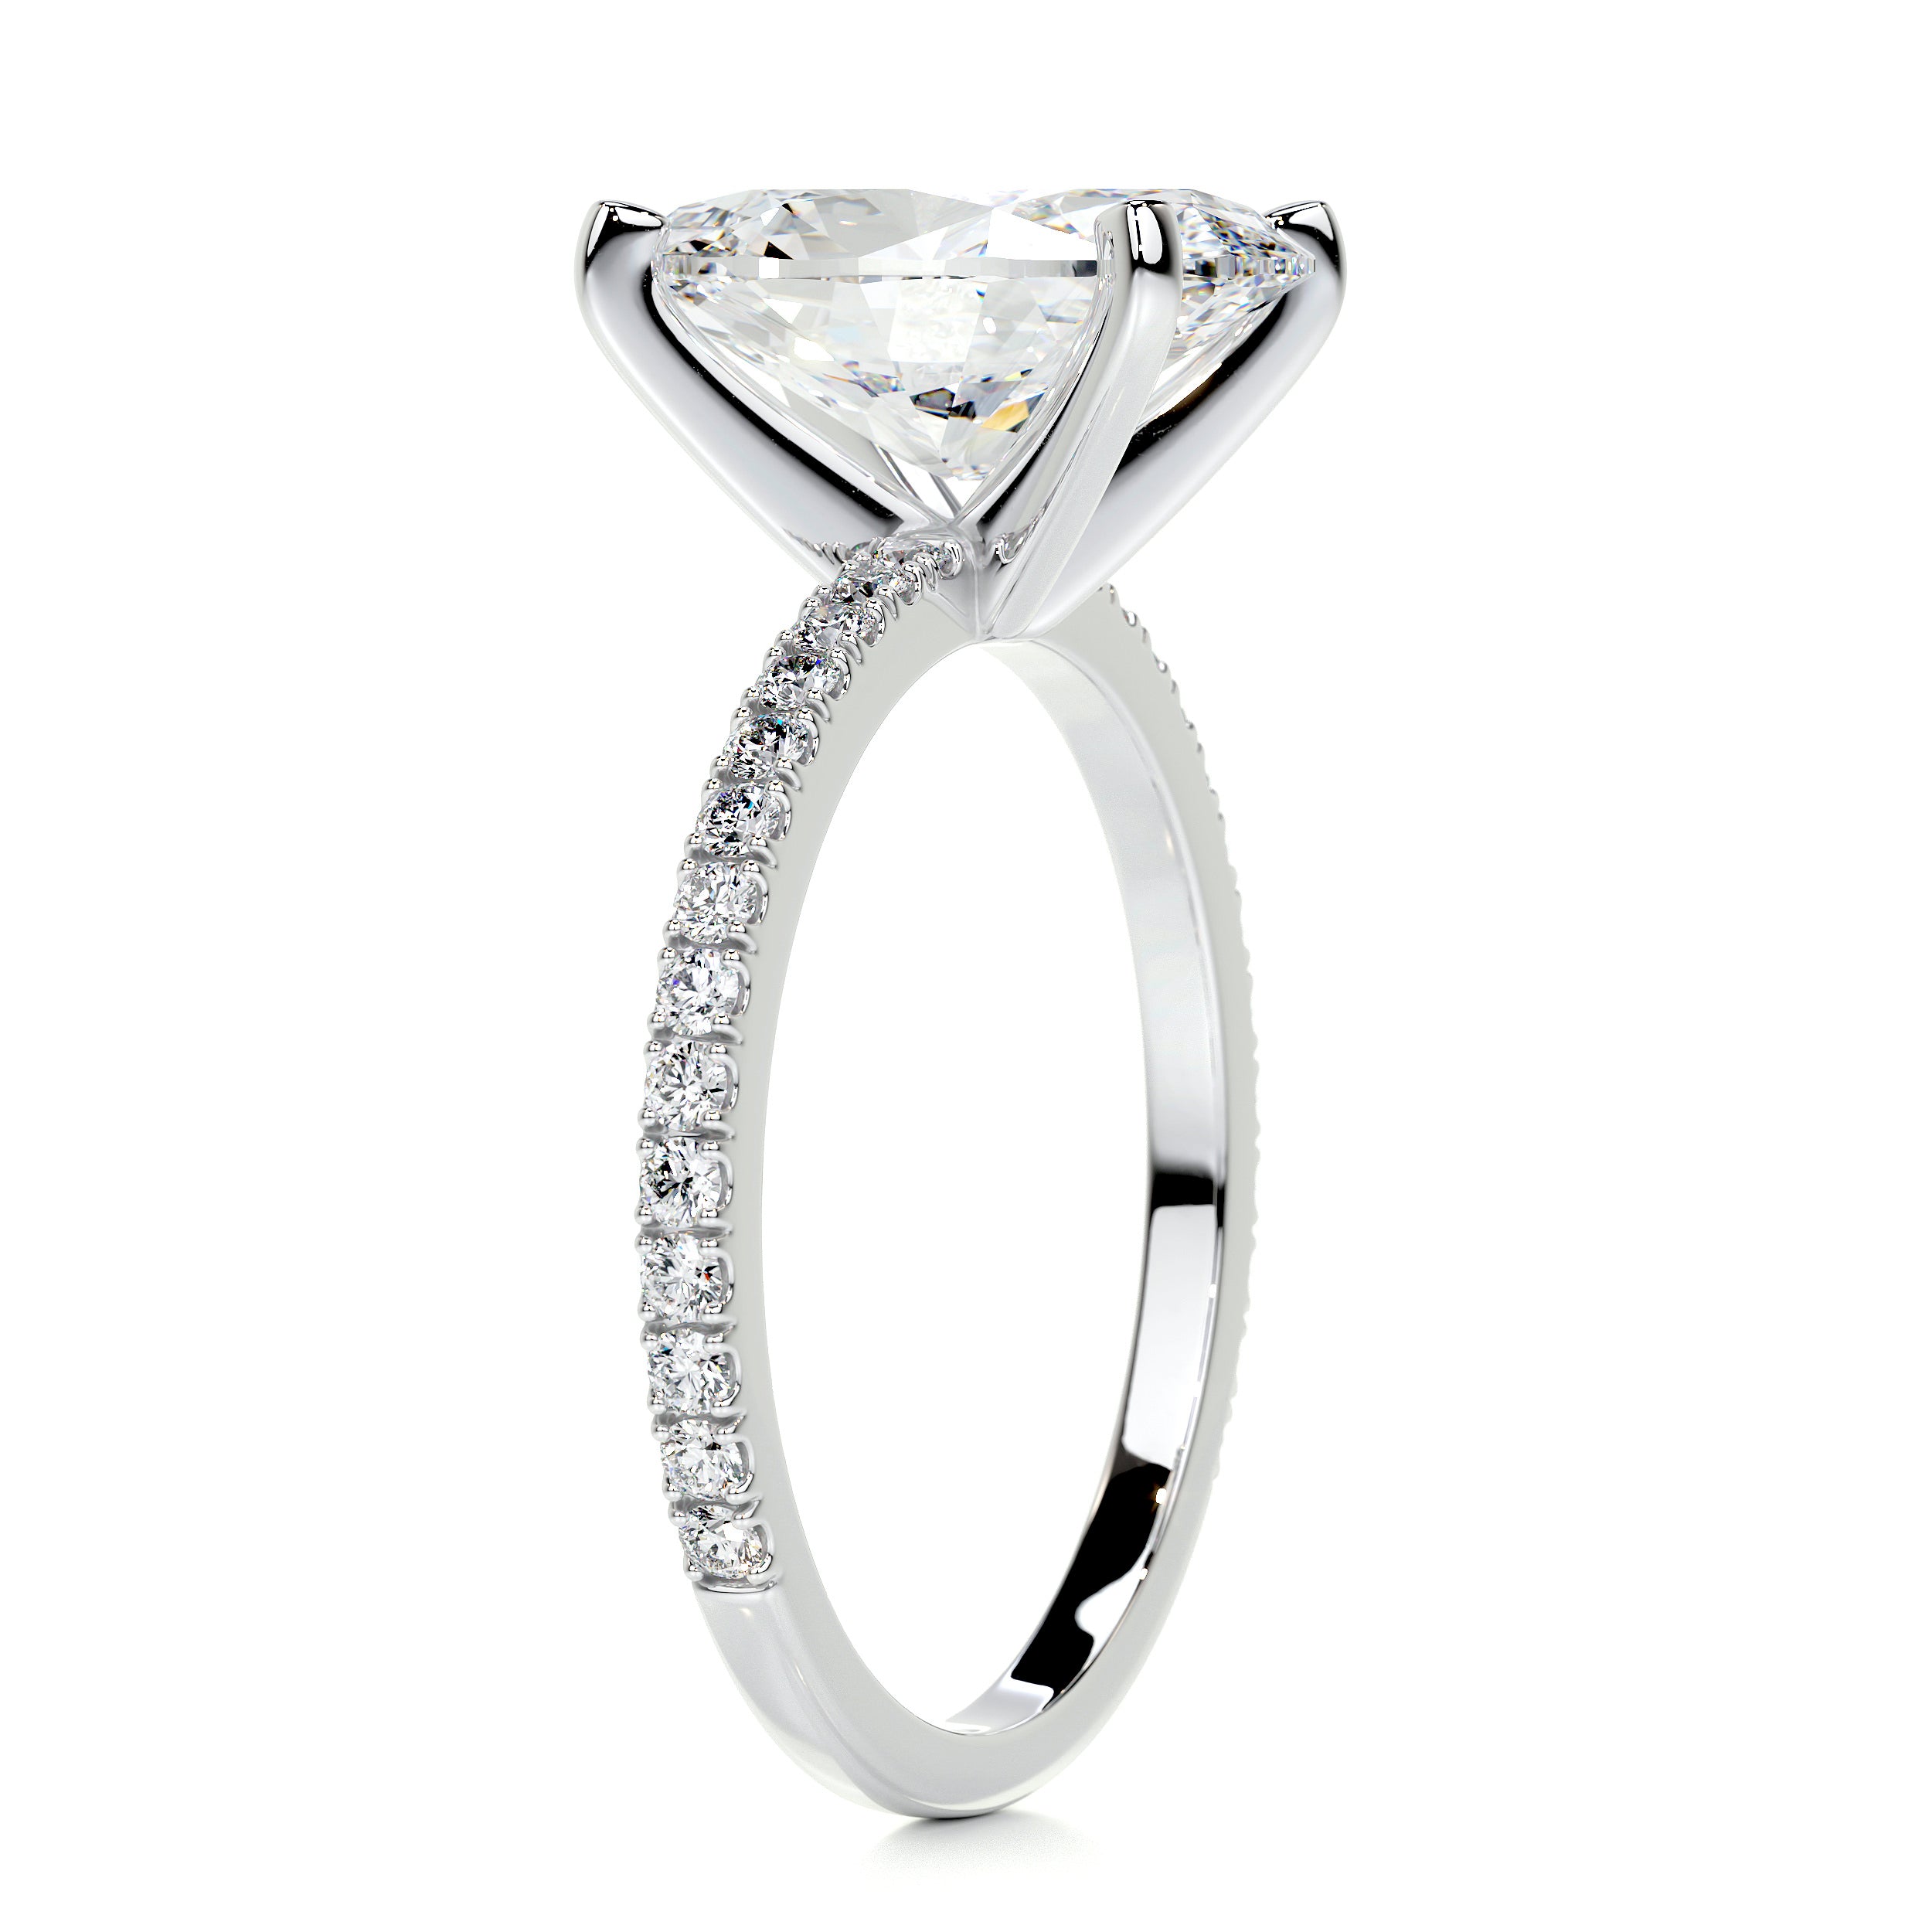 Stephanie Diamond Engagement Ring   (3.30 Carat) -Platinum